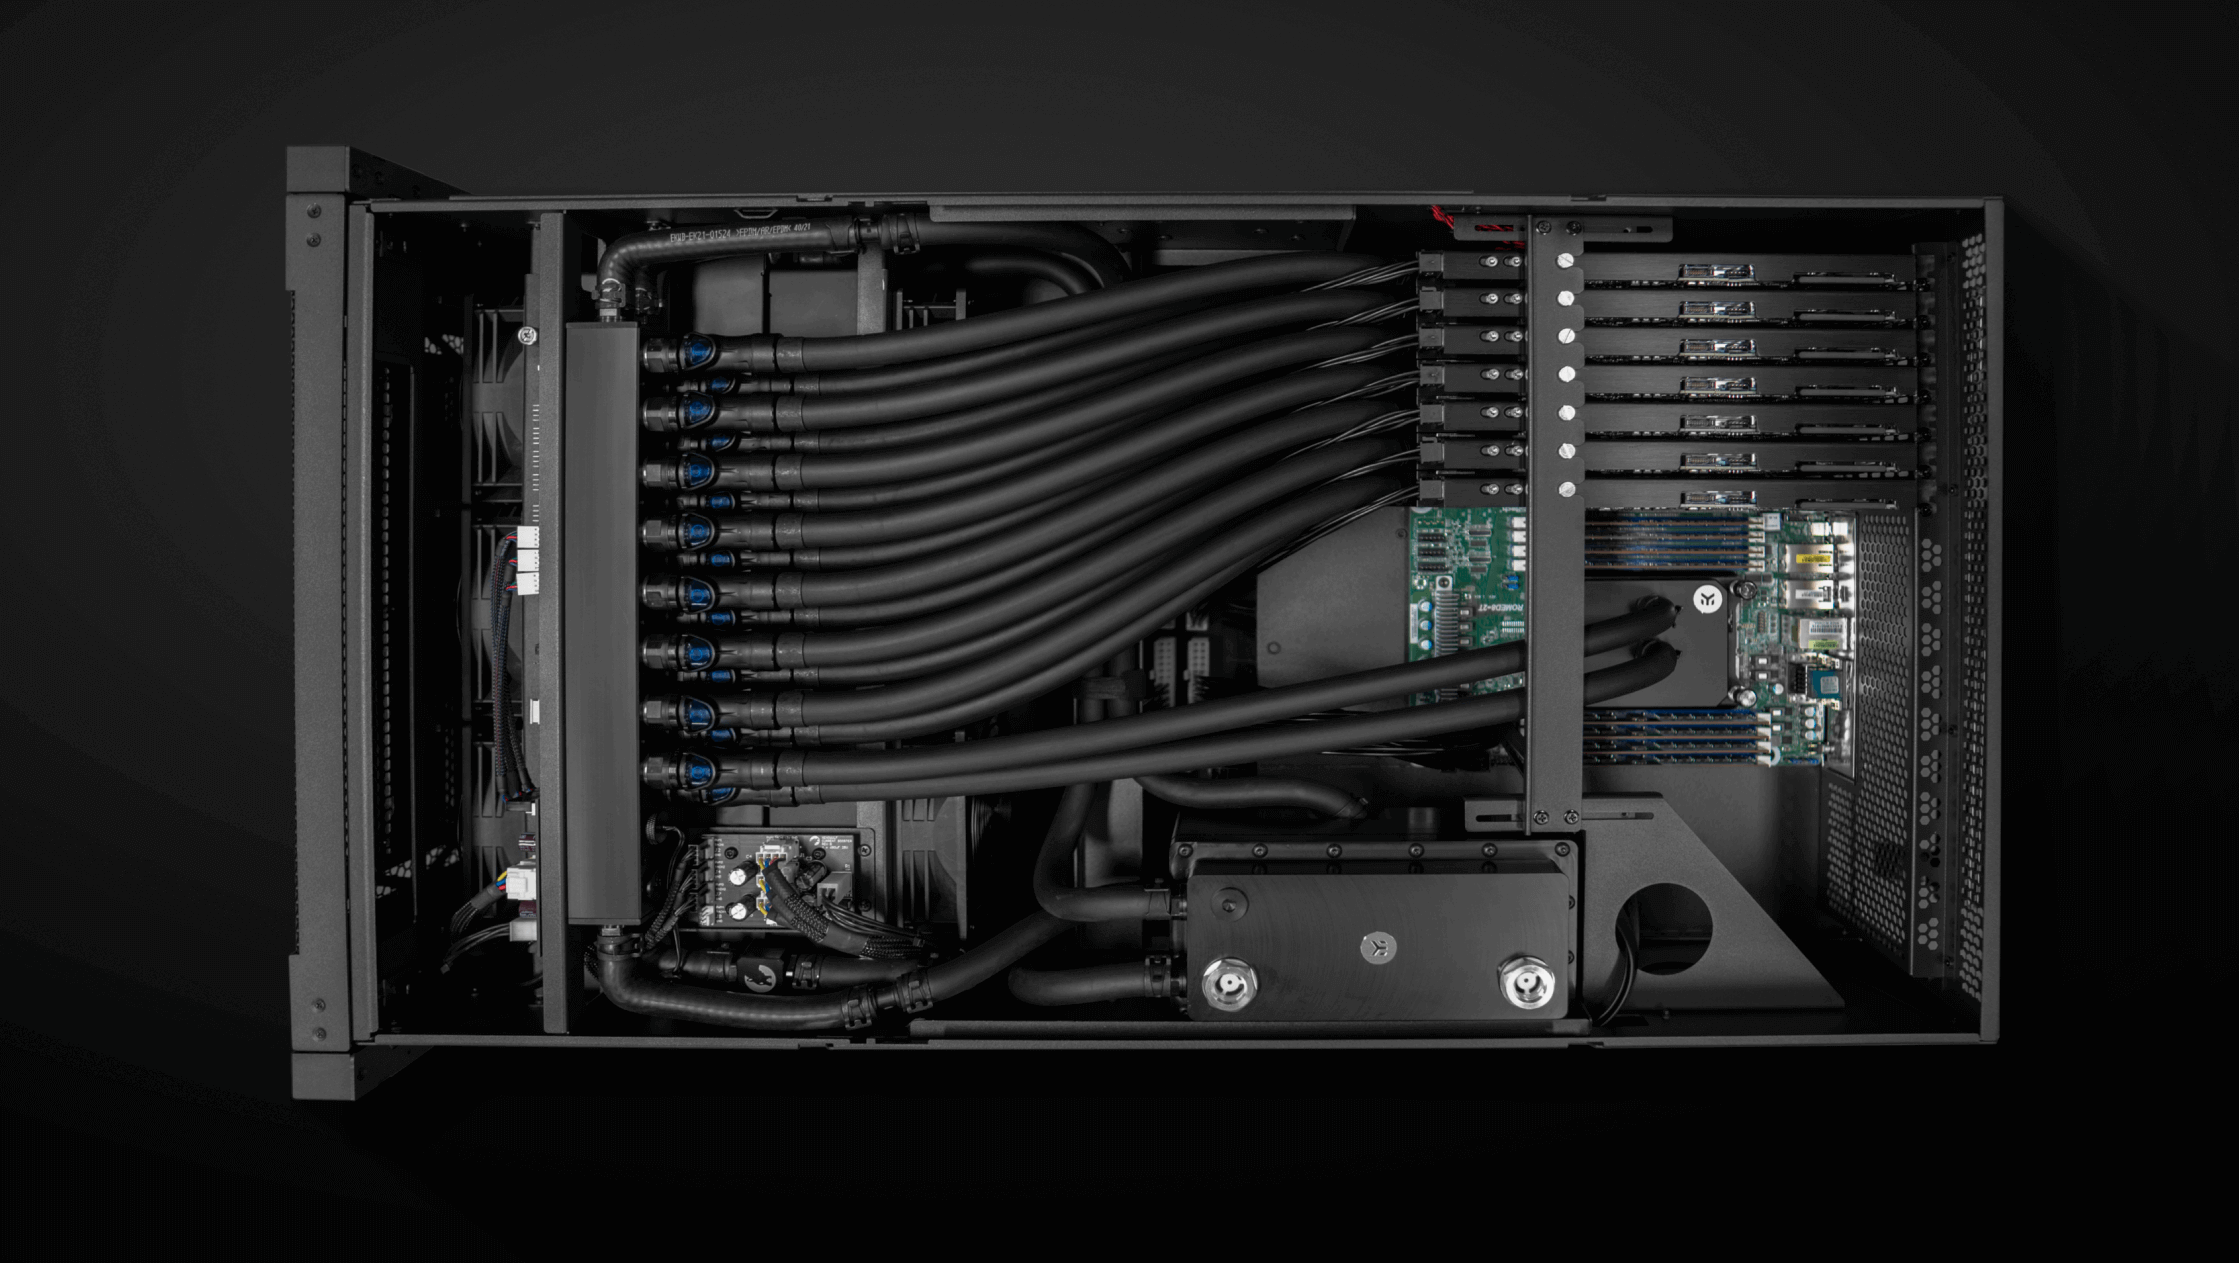 Alt tag: EK Fluid Works Compute Series X7000-RM high-performance GPU server